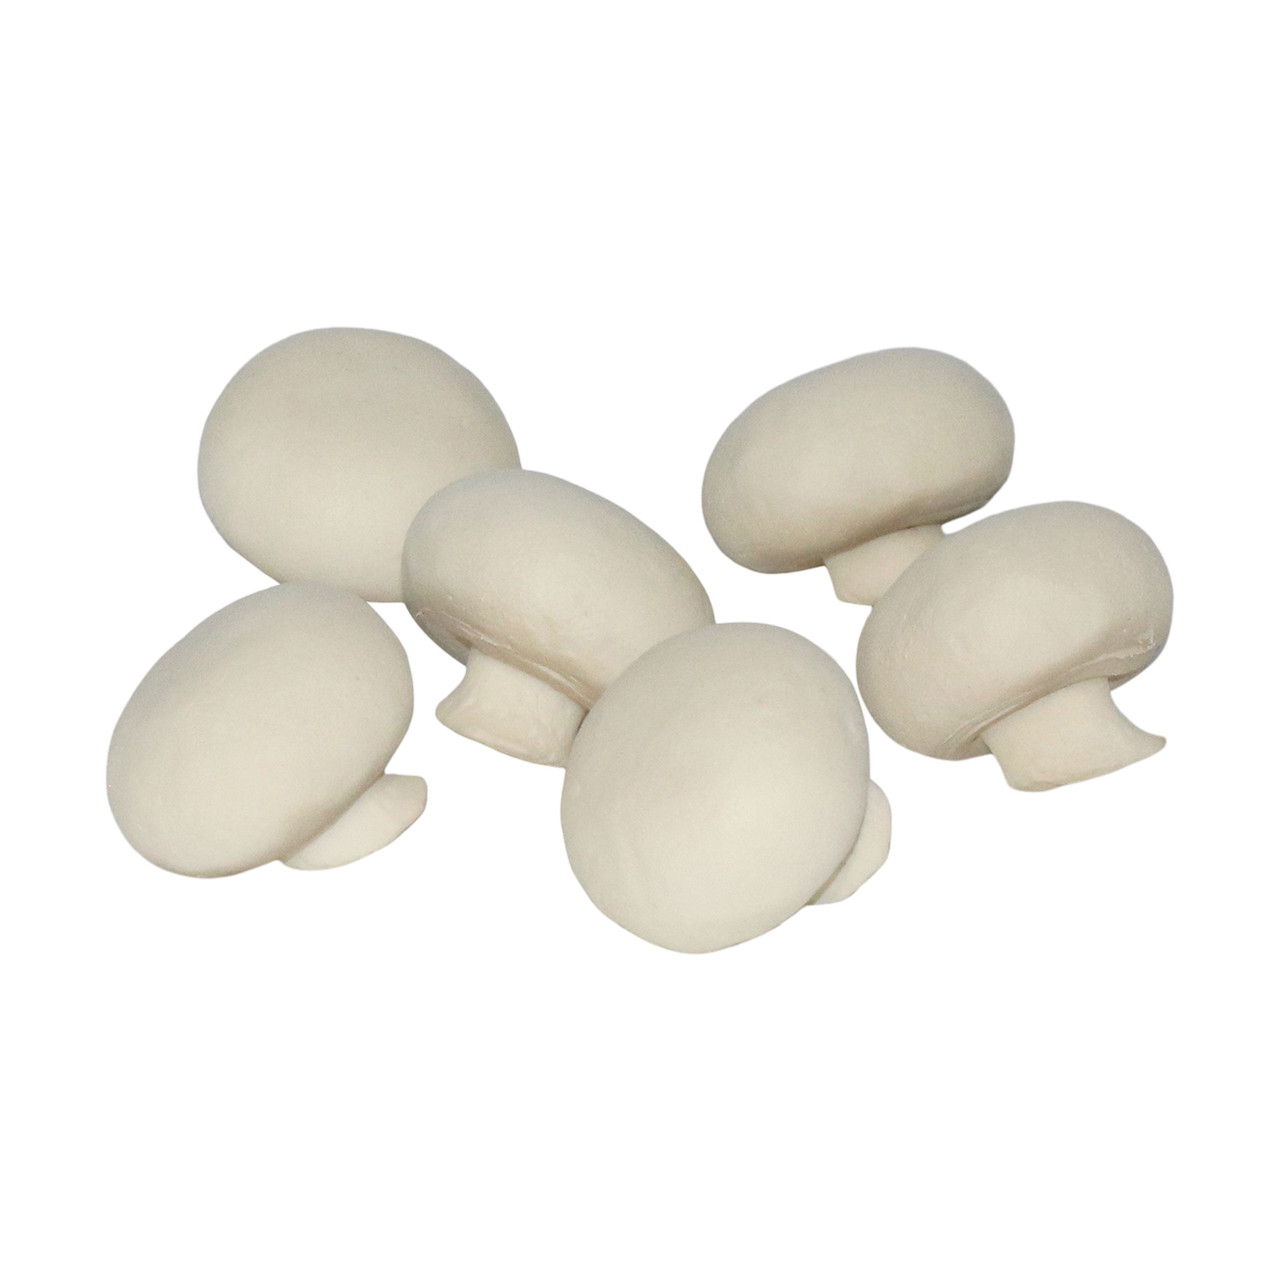 Fake Food White Mushrooms (pack of 6)